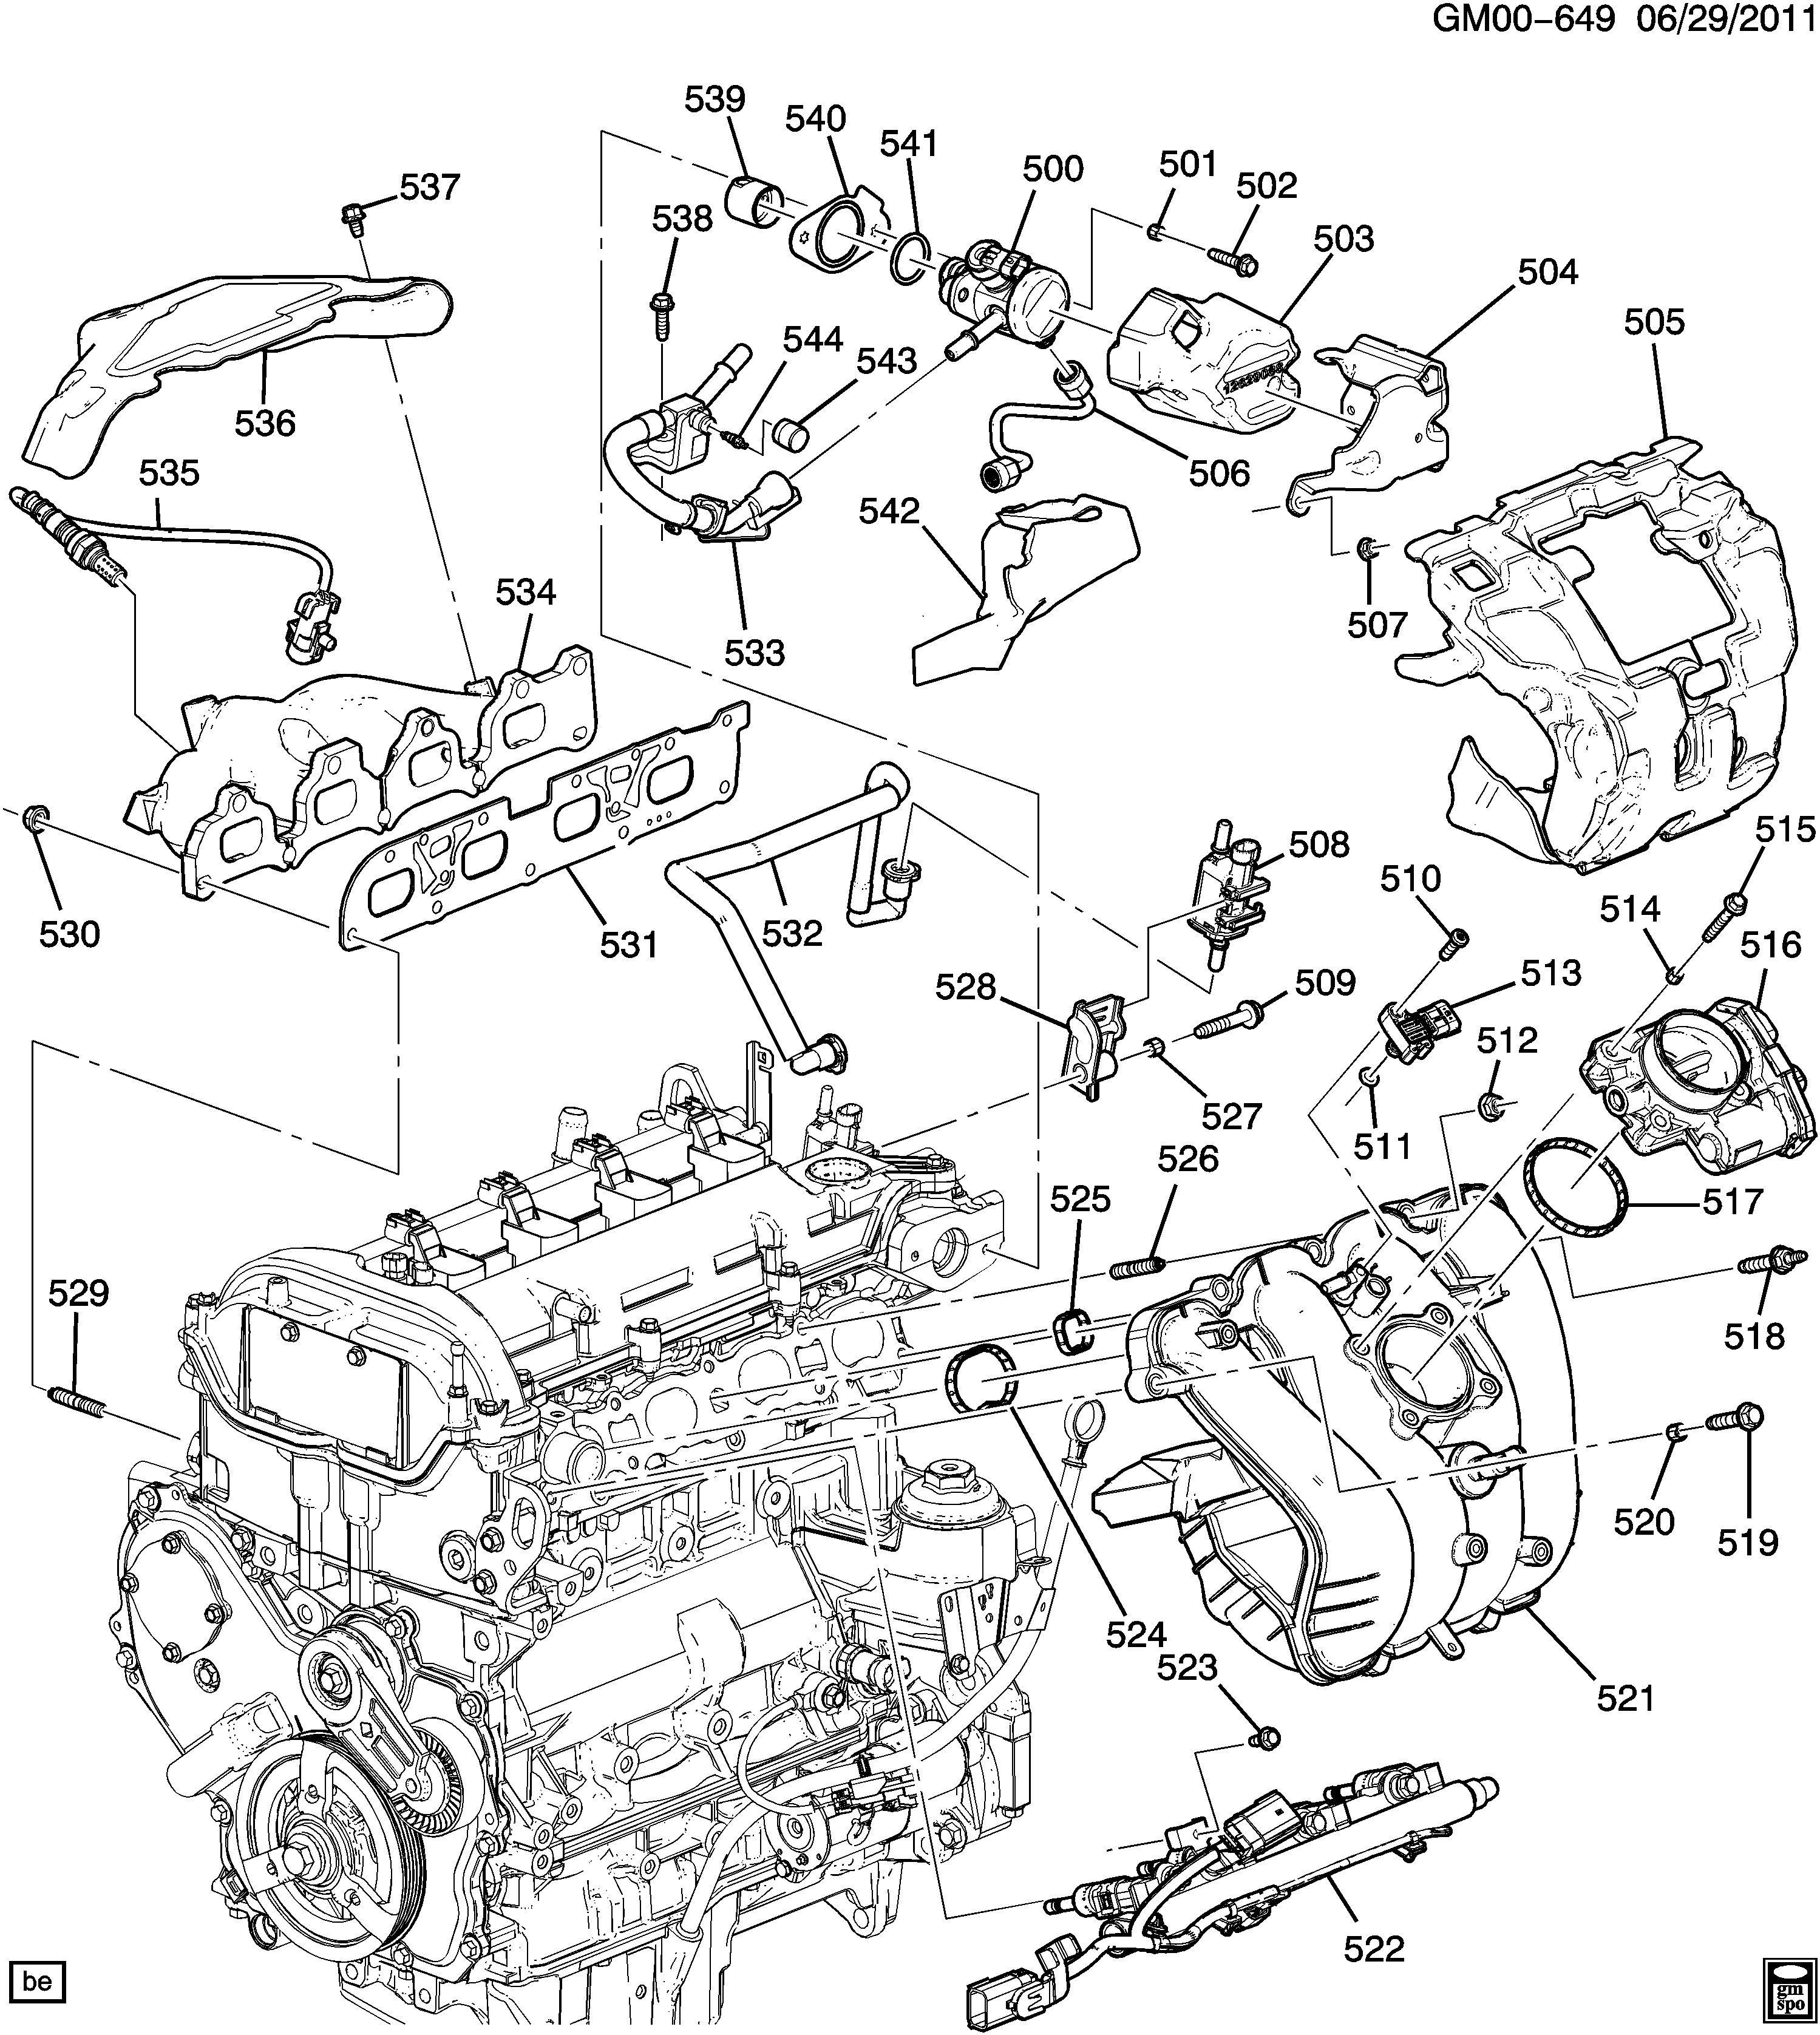 2000 Chevy Malibu Engine Diagram 2000 Malibu Engine Diagram Wiring Diagram Used Of 2000 Chevy Malibu Engine Diagram